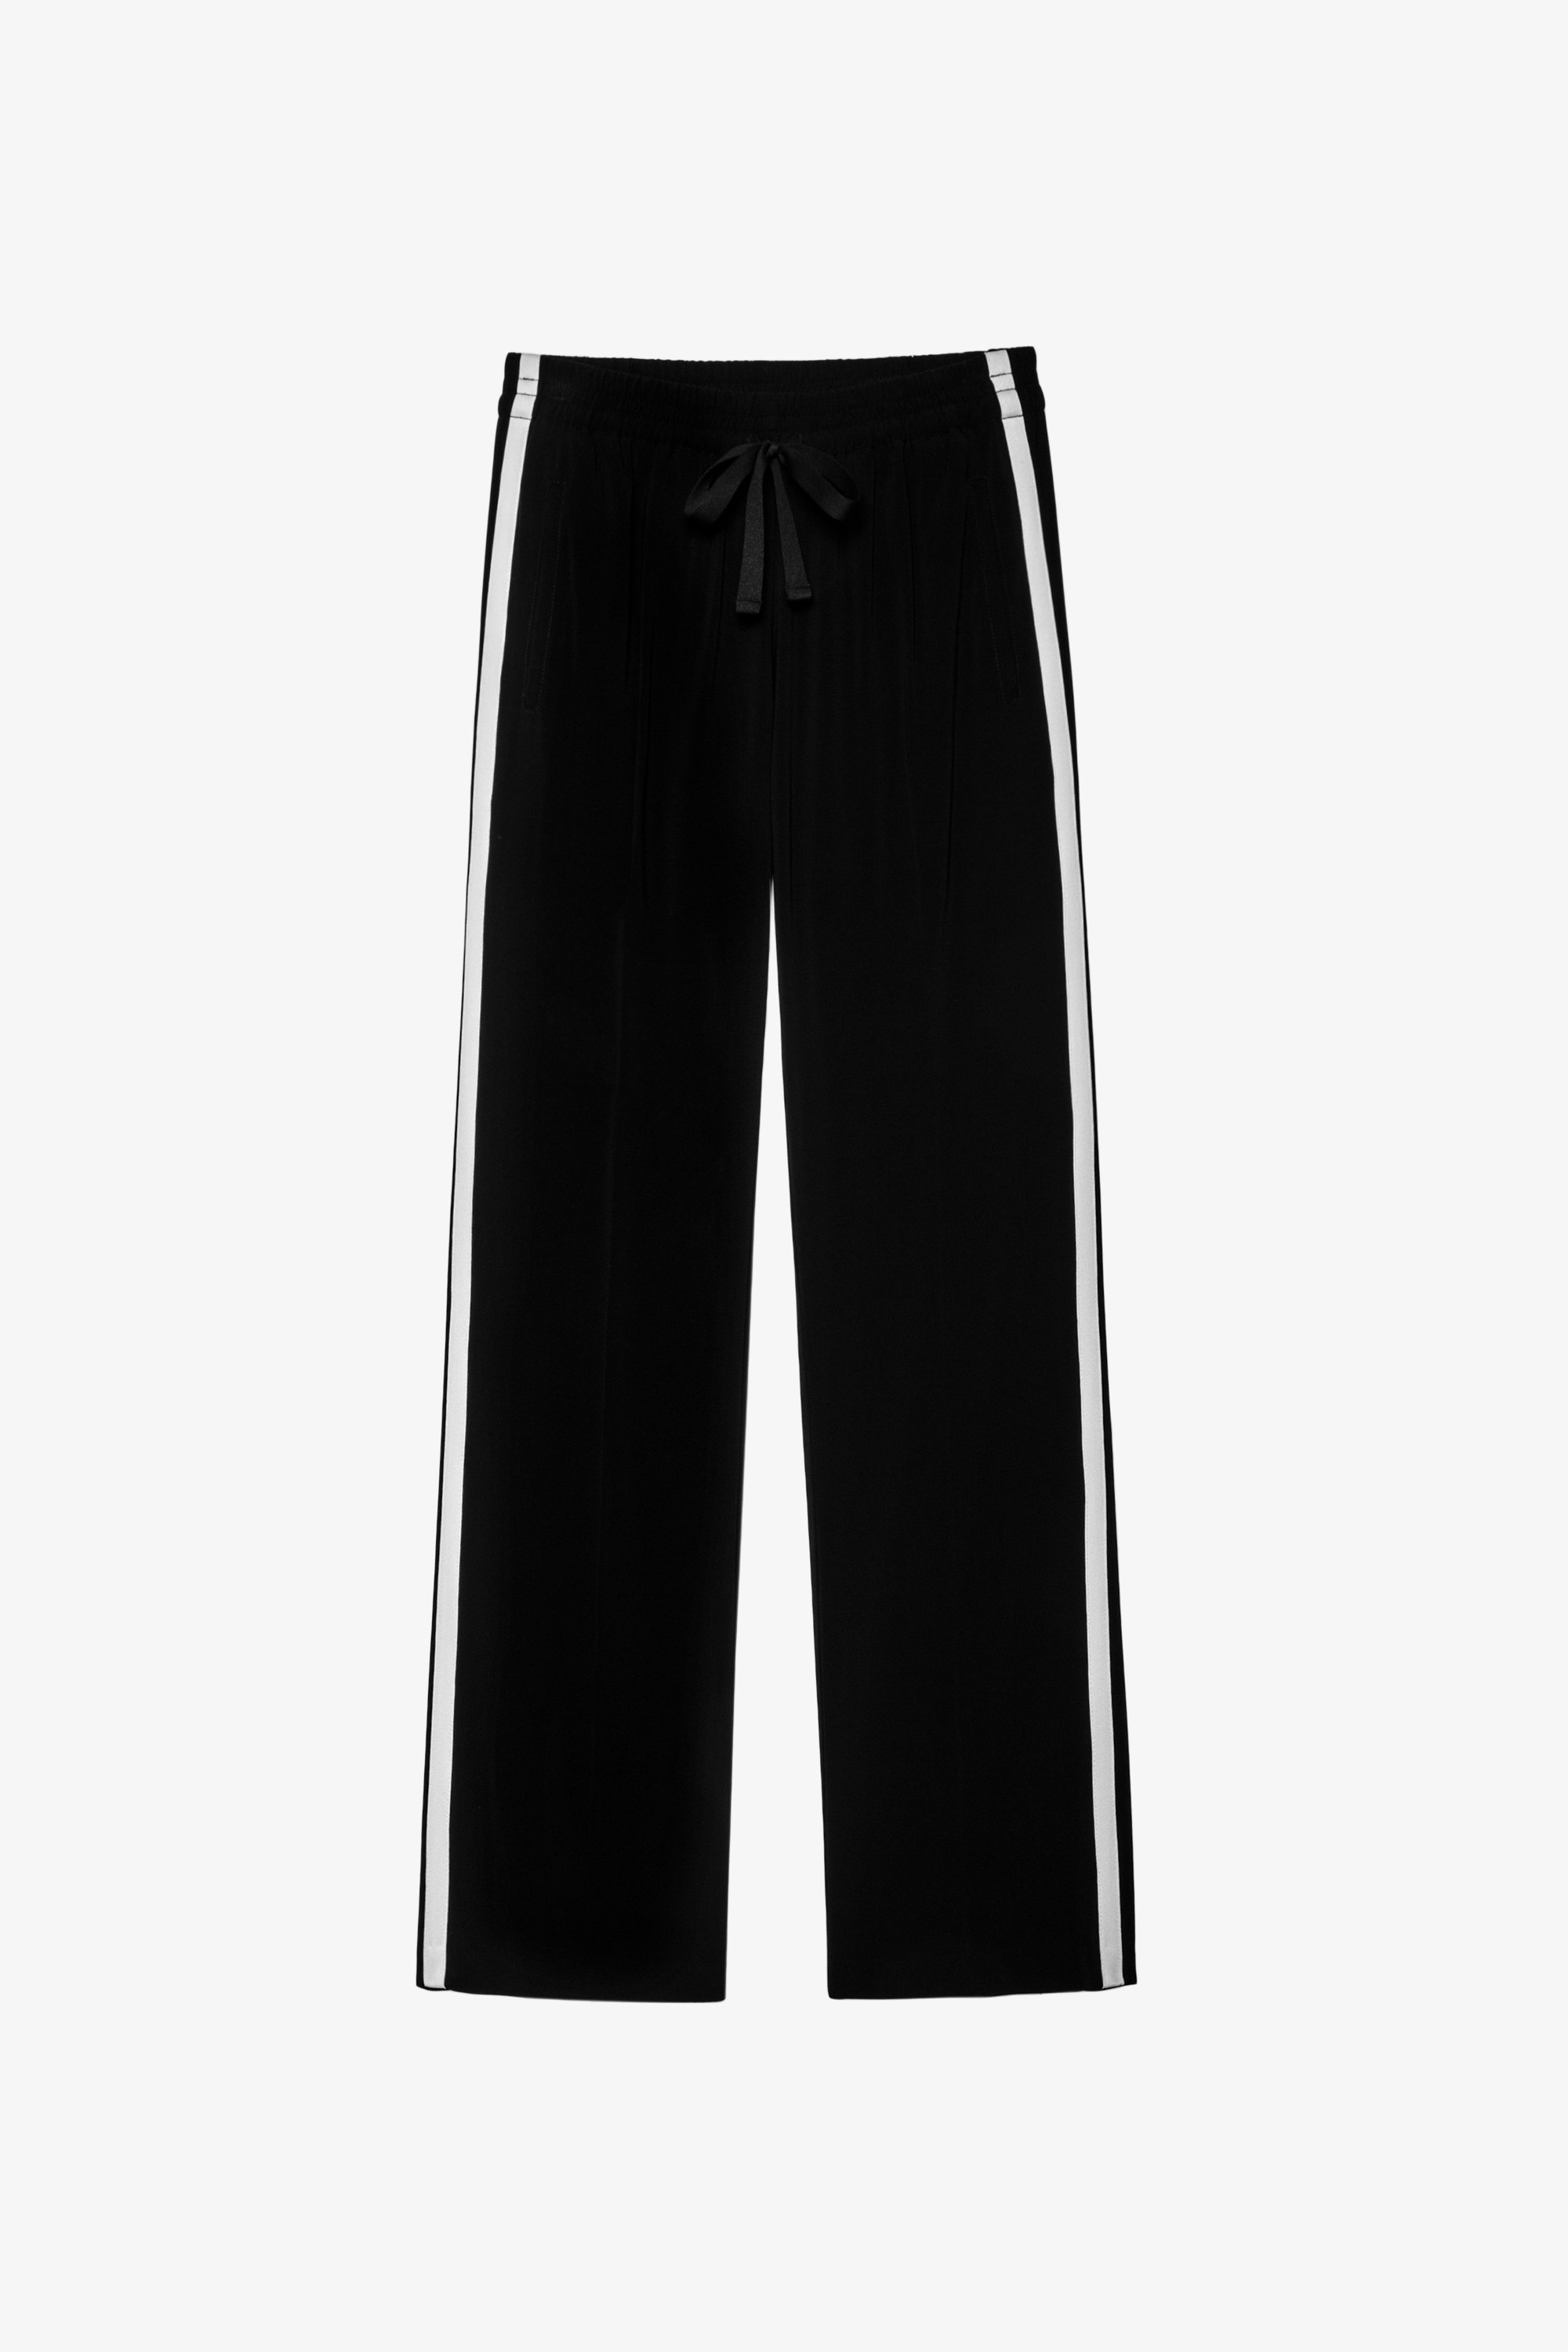 Pomy Pants Women's flowing black trousers.